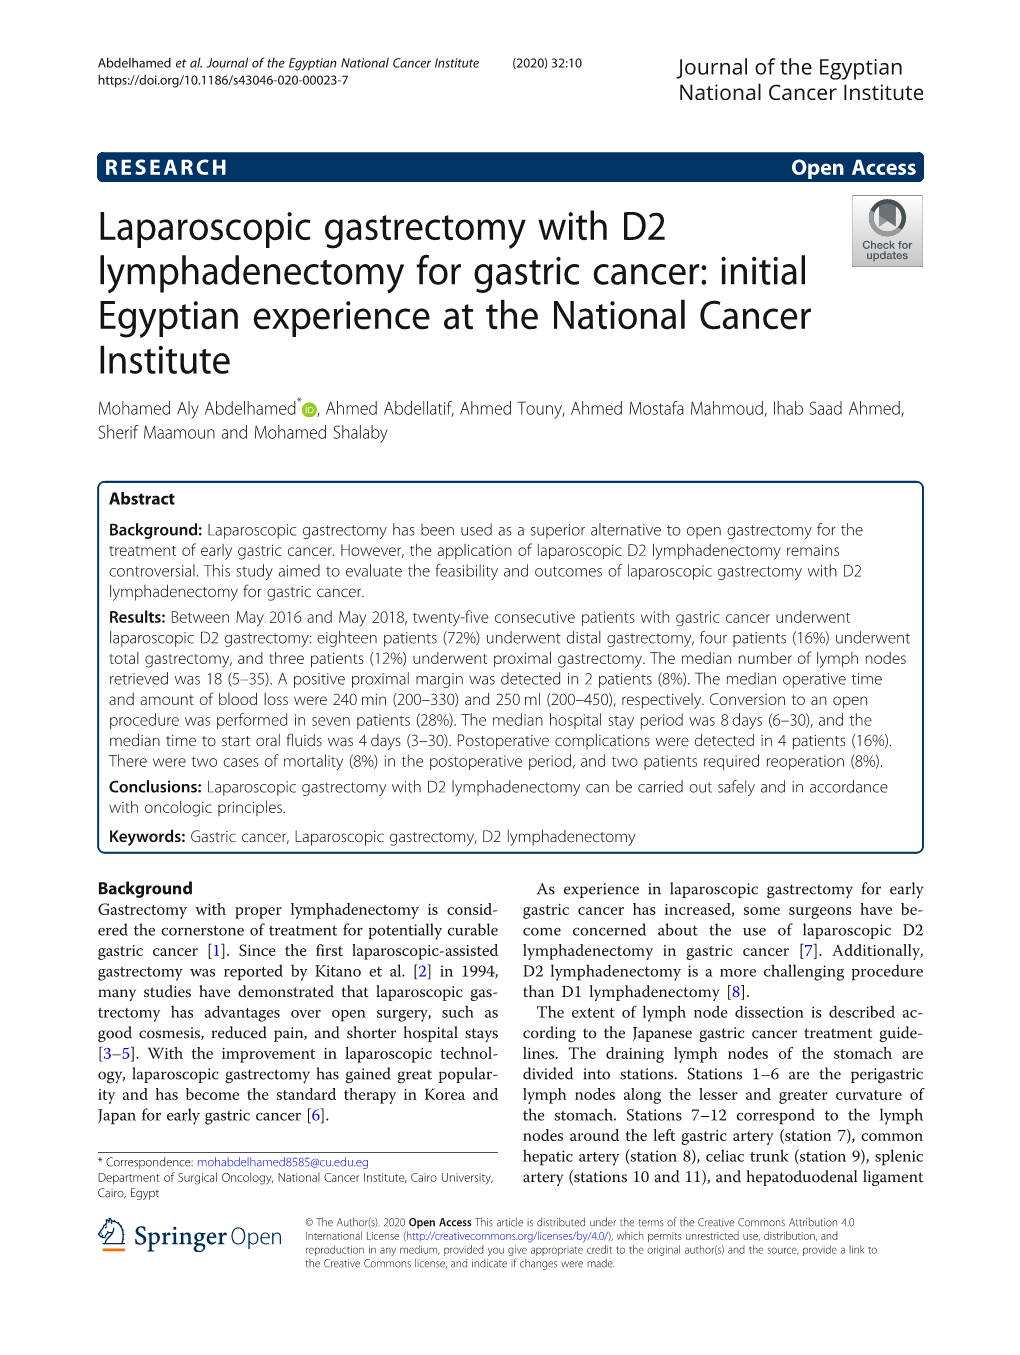 Laparoscopic Gastrectomy with D2 Lymphadenectomy for Gastric Cancer